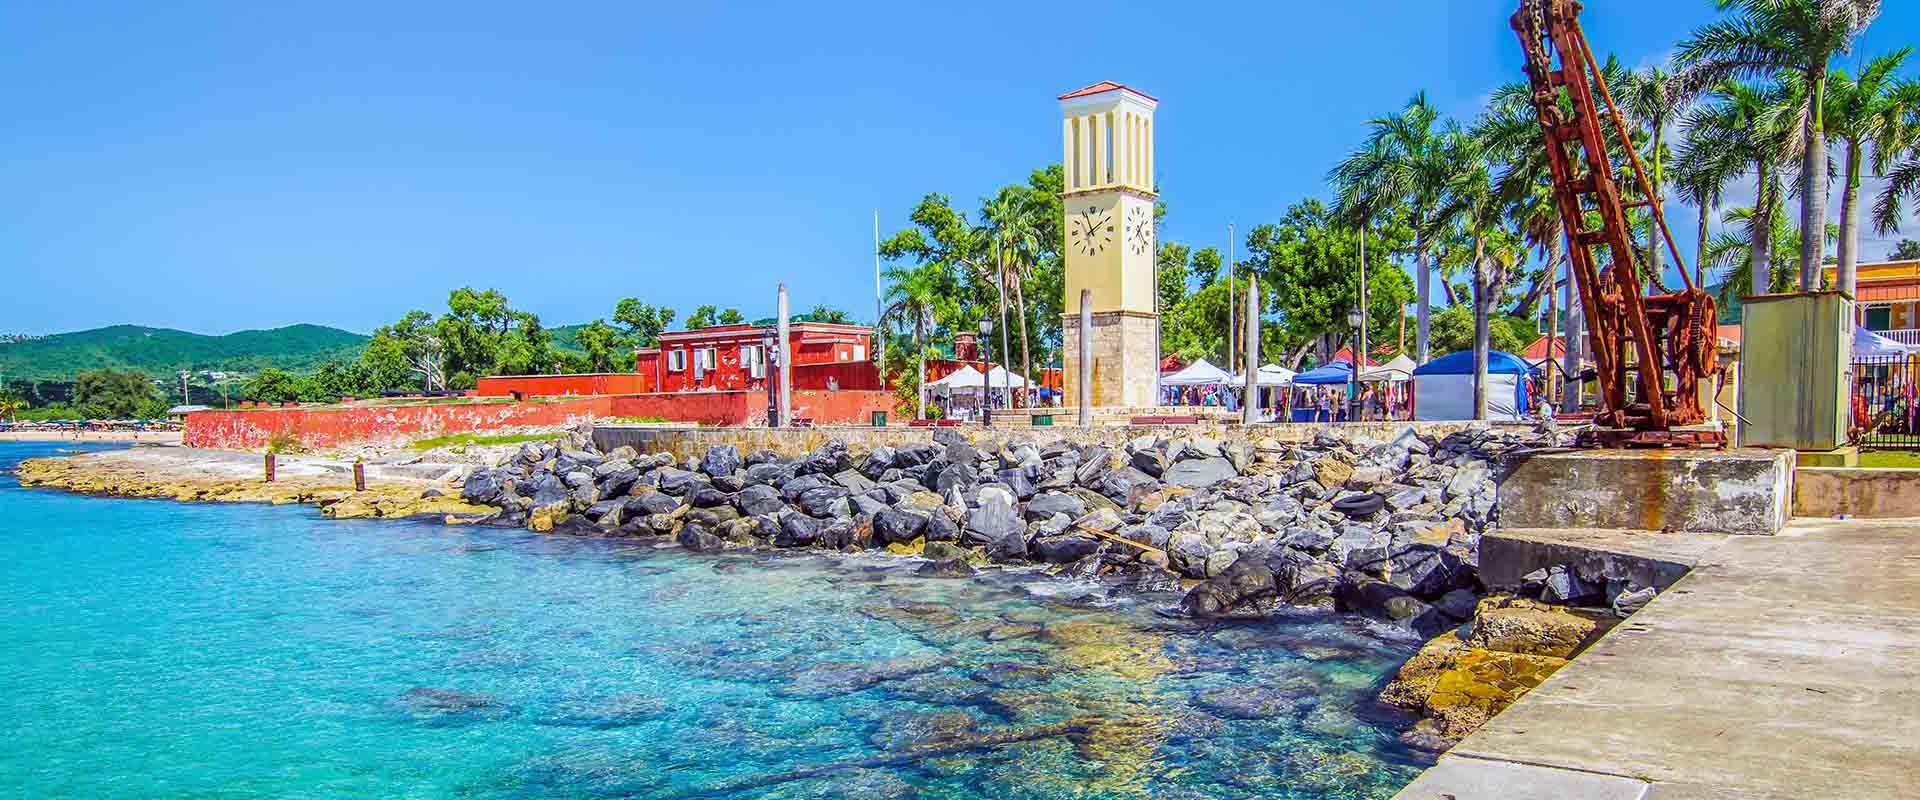 2 Cruises in Virgin Islands - LiveAboard.com